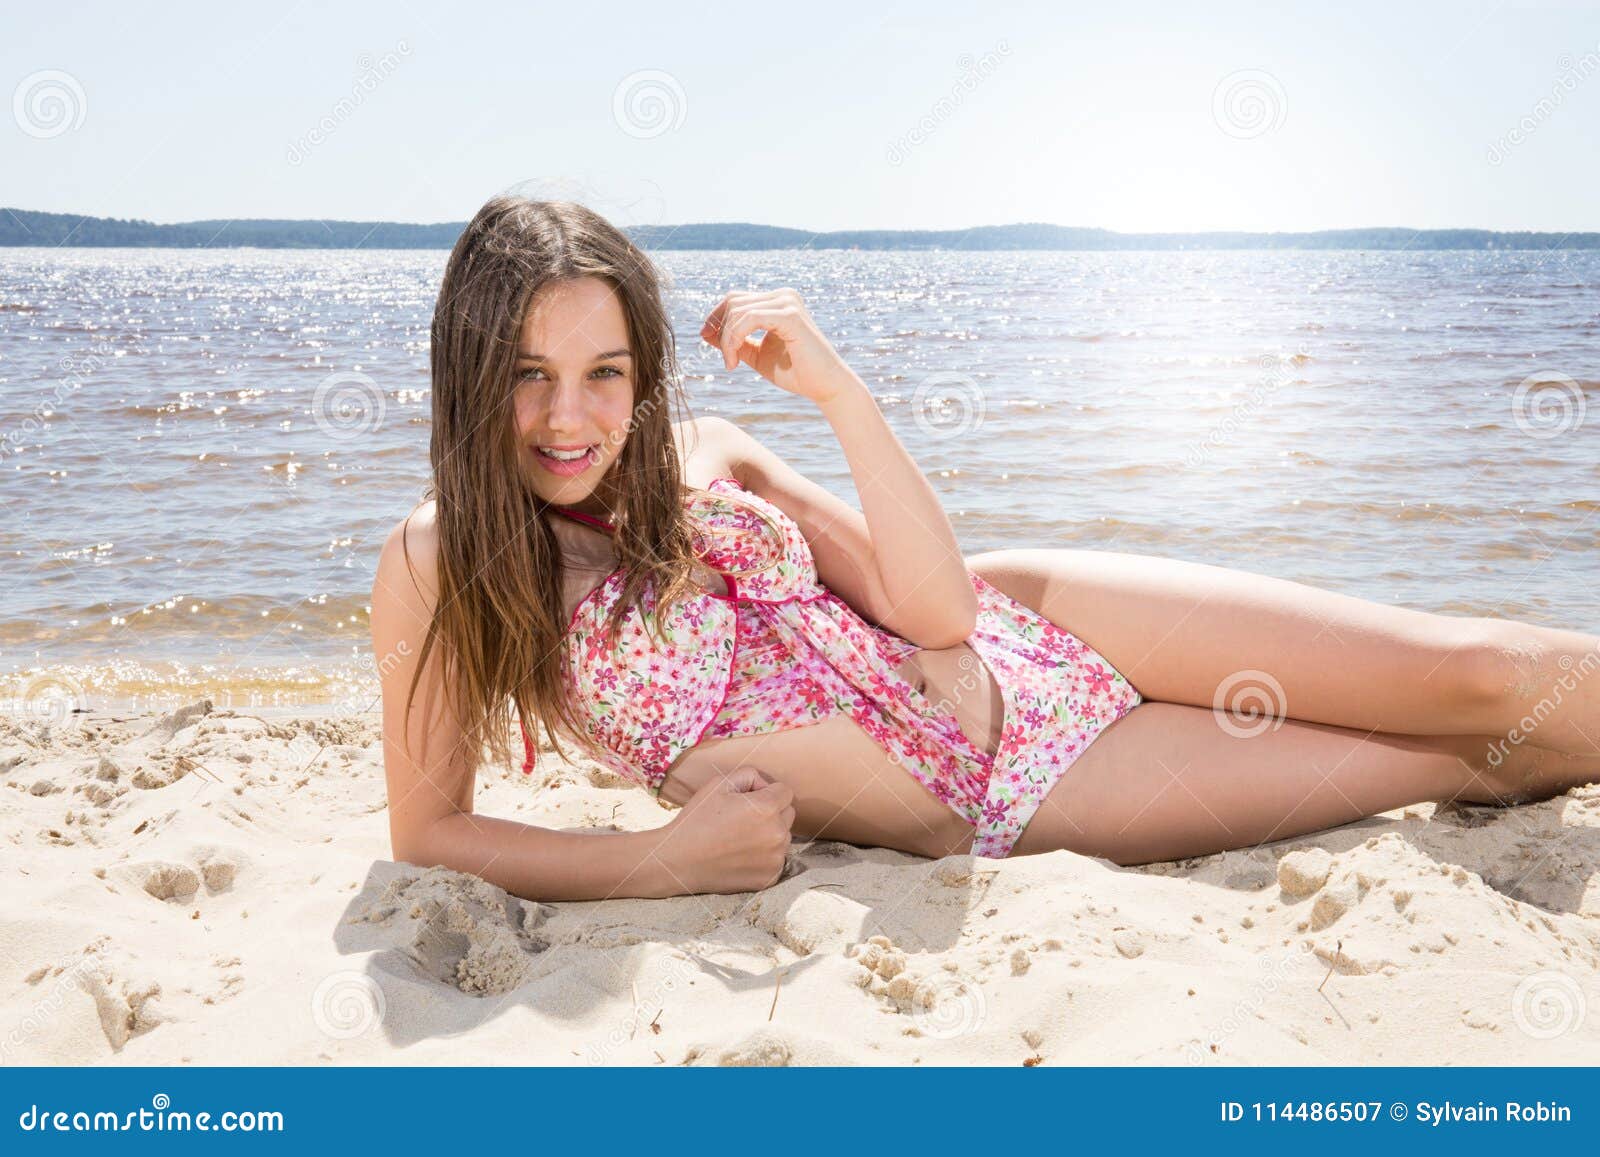 1,779 Teenager Bikini Model Stock Photos - Free & Royalty-Free Stock Photos  from Dreamstime